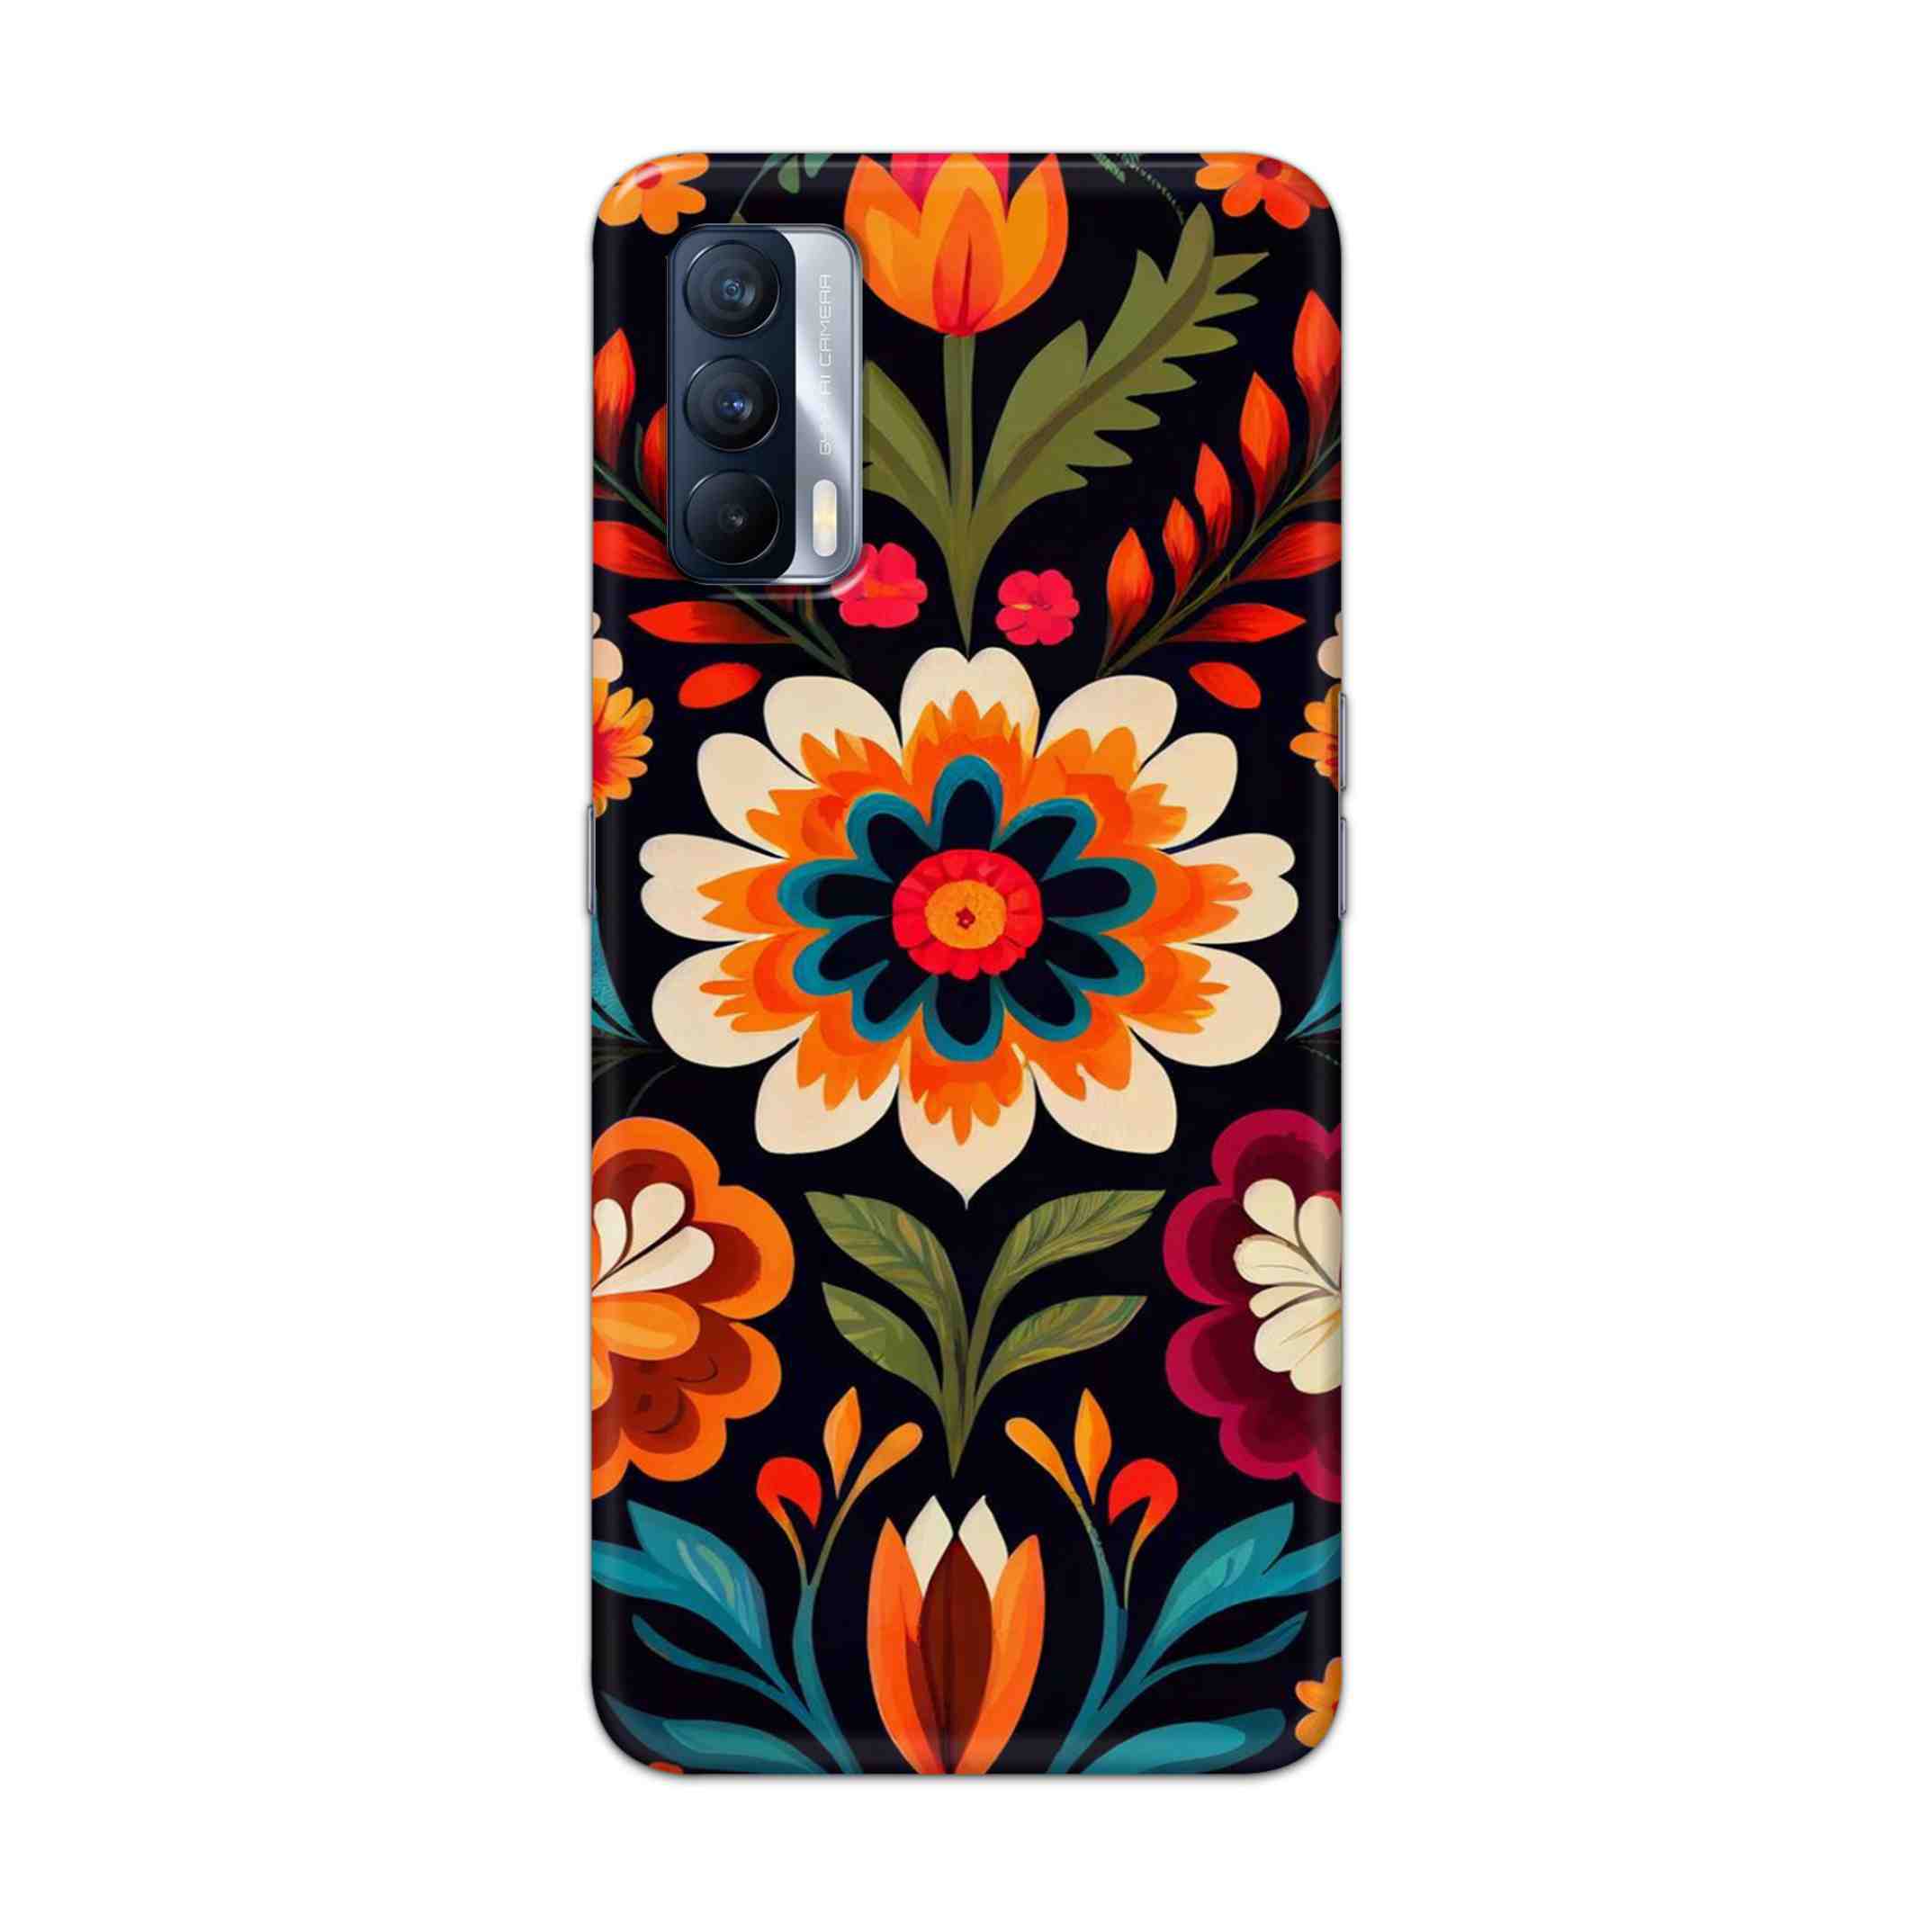 Buy Flower Hard Back Mobile Phone Case Cover For Realme X7 Online